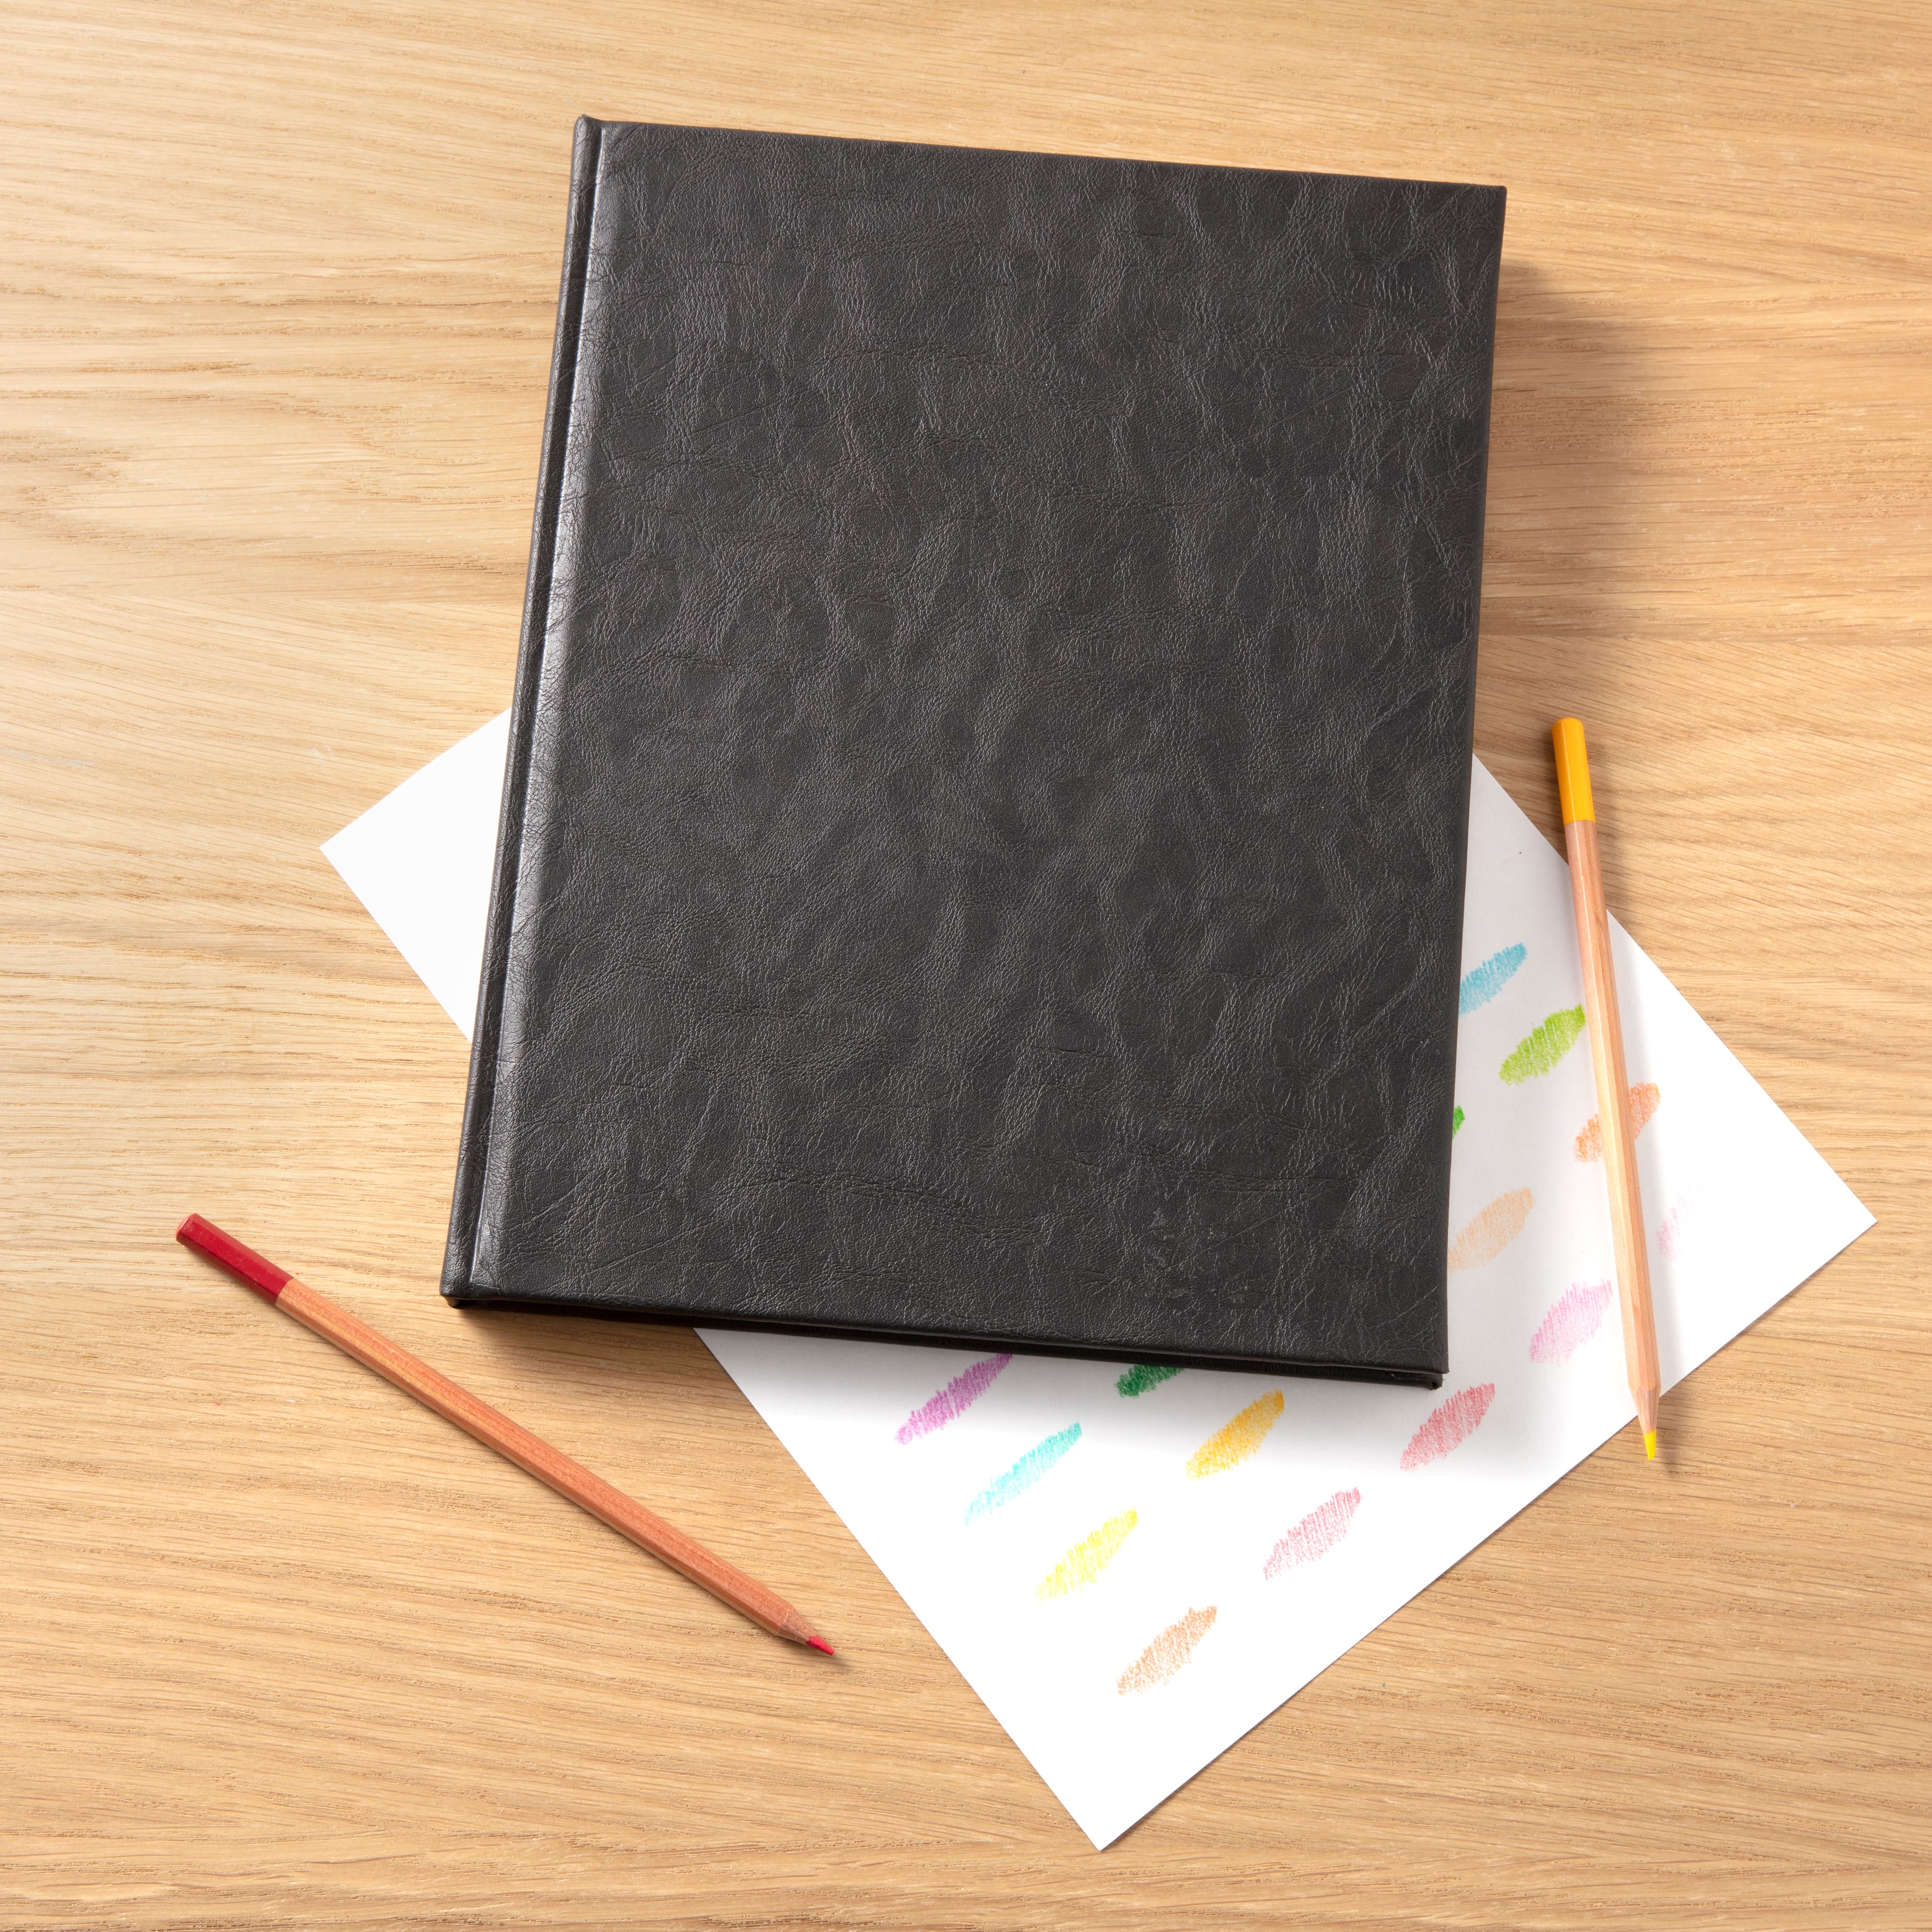 Buy the Black Wirebound Sketchbook by Artist's Loft™ at Michaels